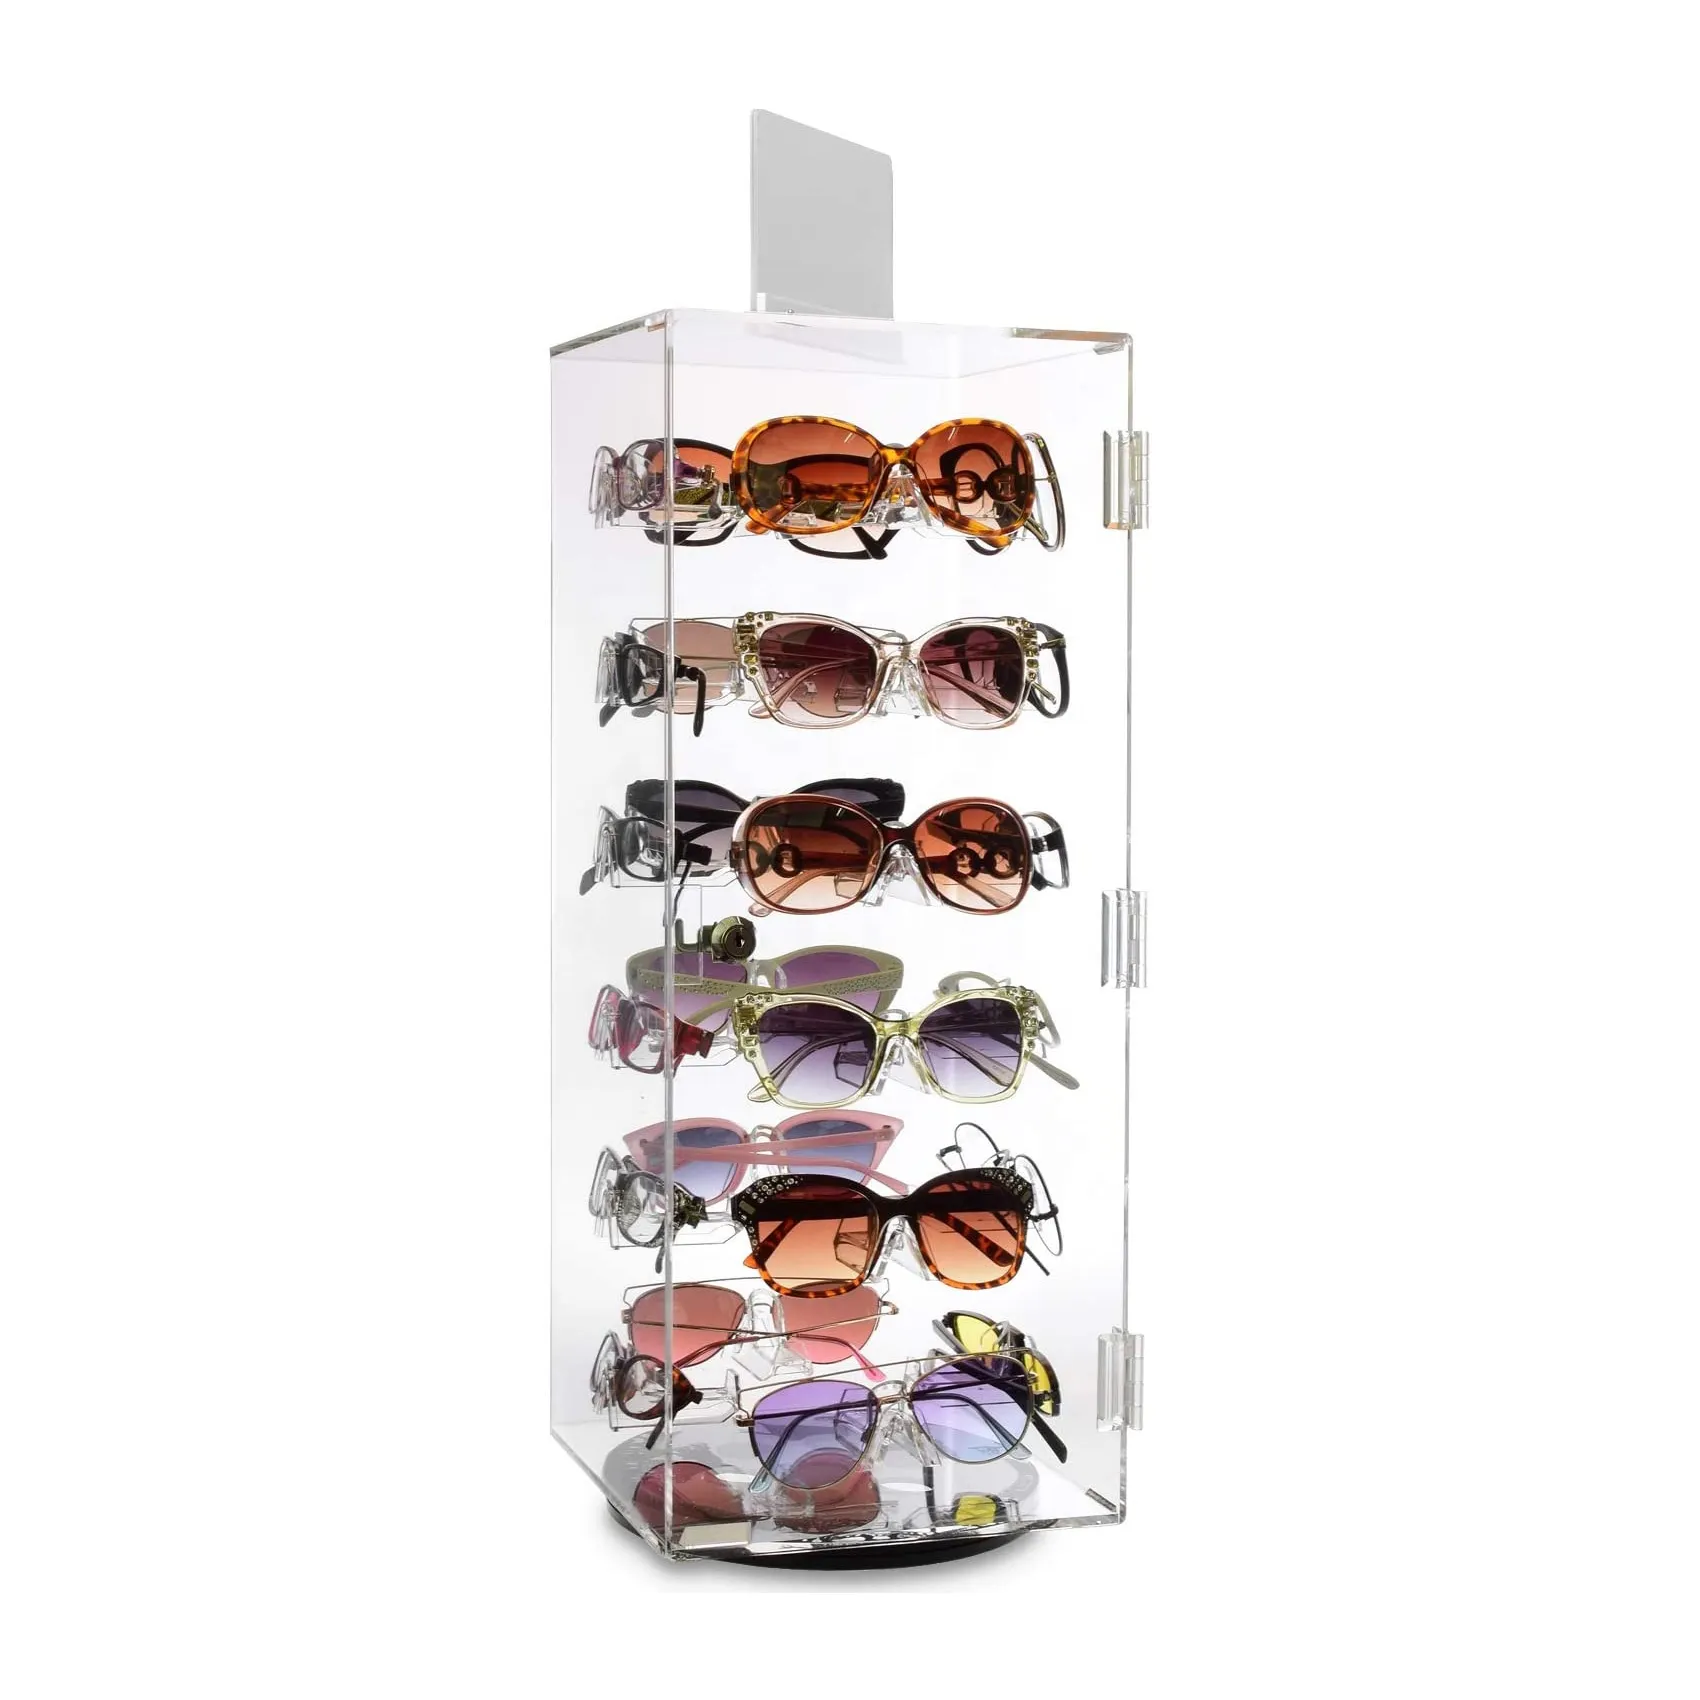 Estuche de exhibición de gafas de sol giratorio Bloqueable, caja de almacenamiento de accesorios, escaparate de exhibición de gafas acrílicas con soporte de señal